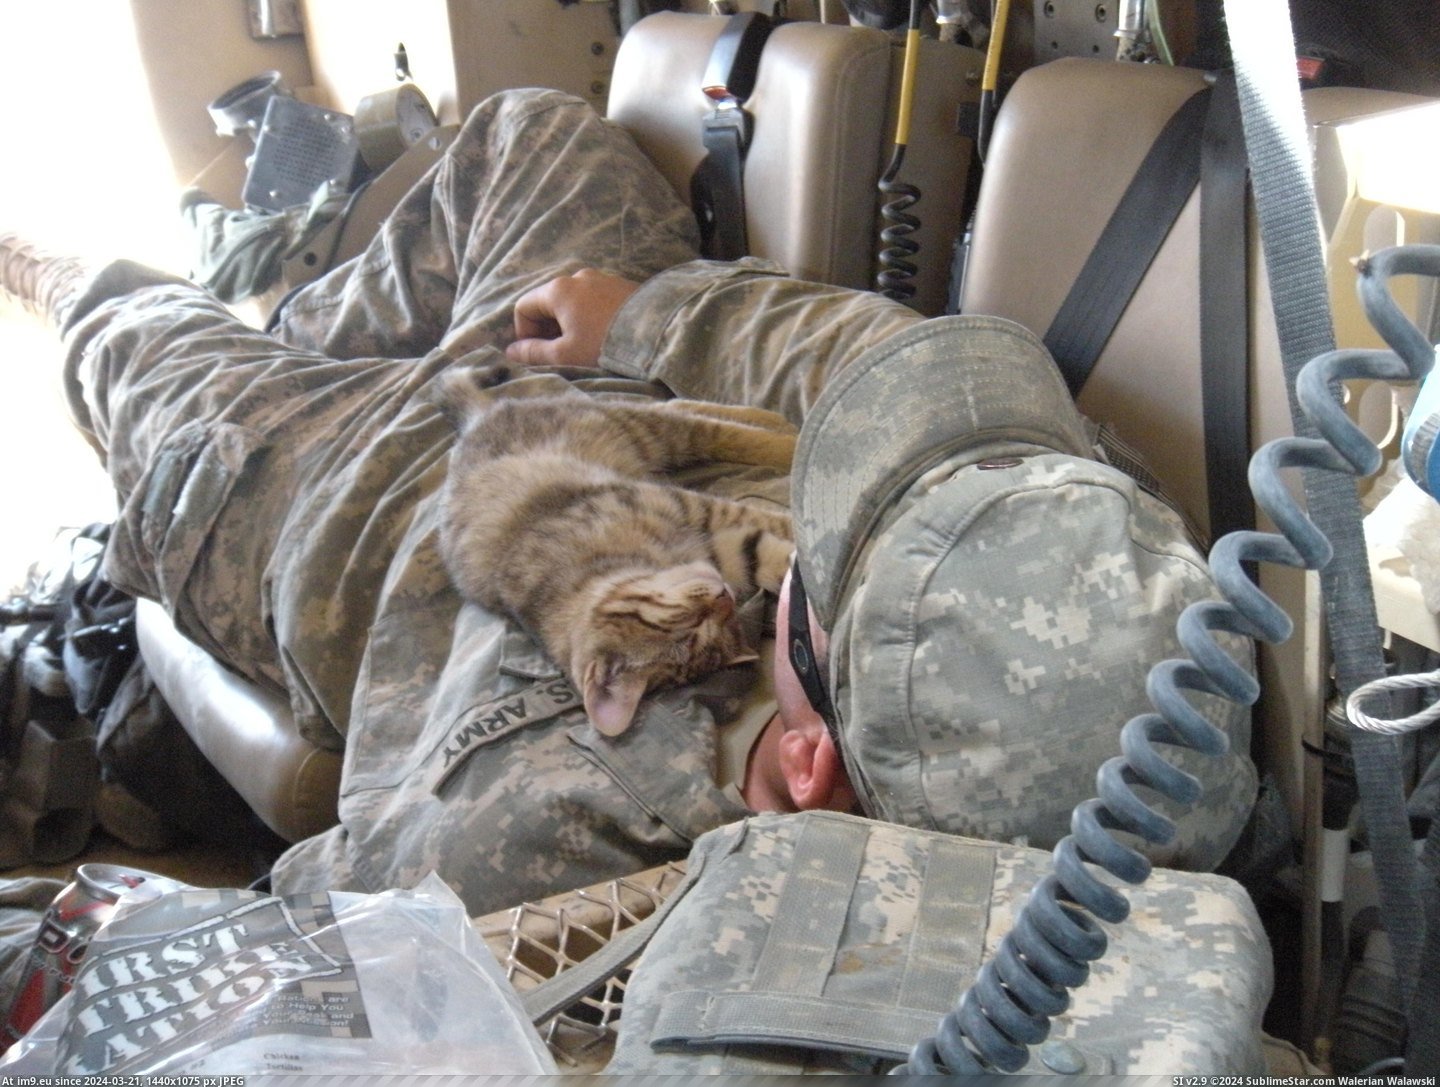 #Cats #You #Kitty #Veterans #Maxpro #Day #Present [Cats] Since it's Veterans day, I present to you...Maxpro kitty. 1 Pic. (Bild von album My r/CATS favs))